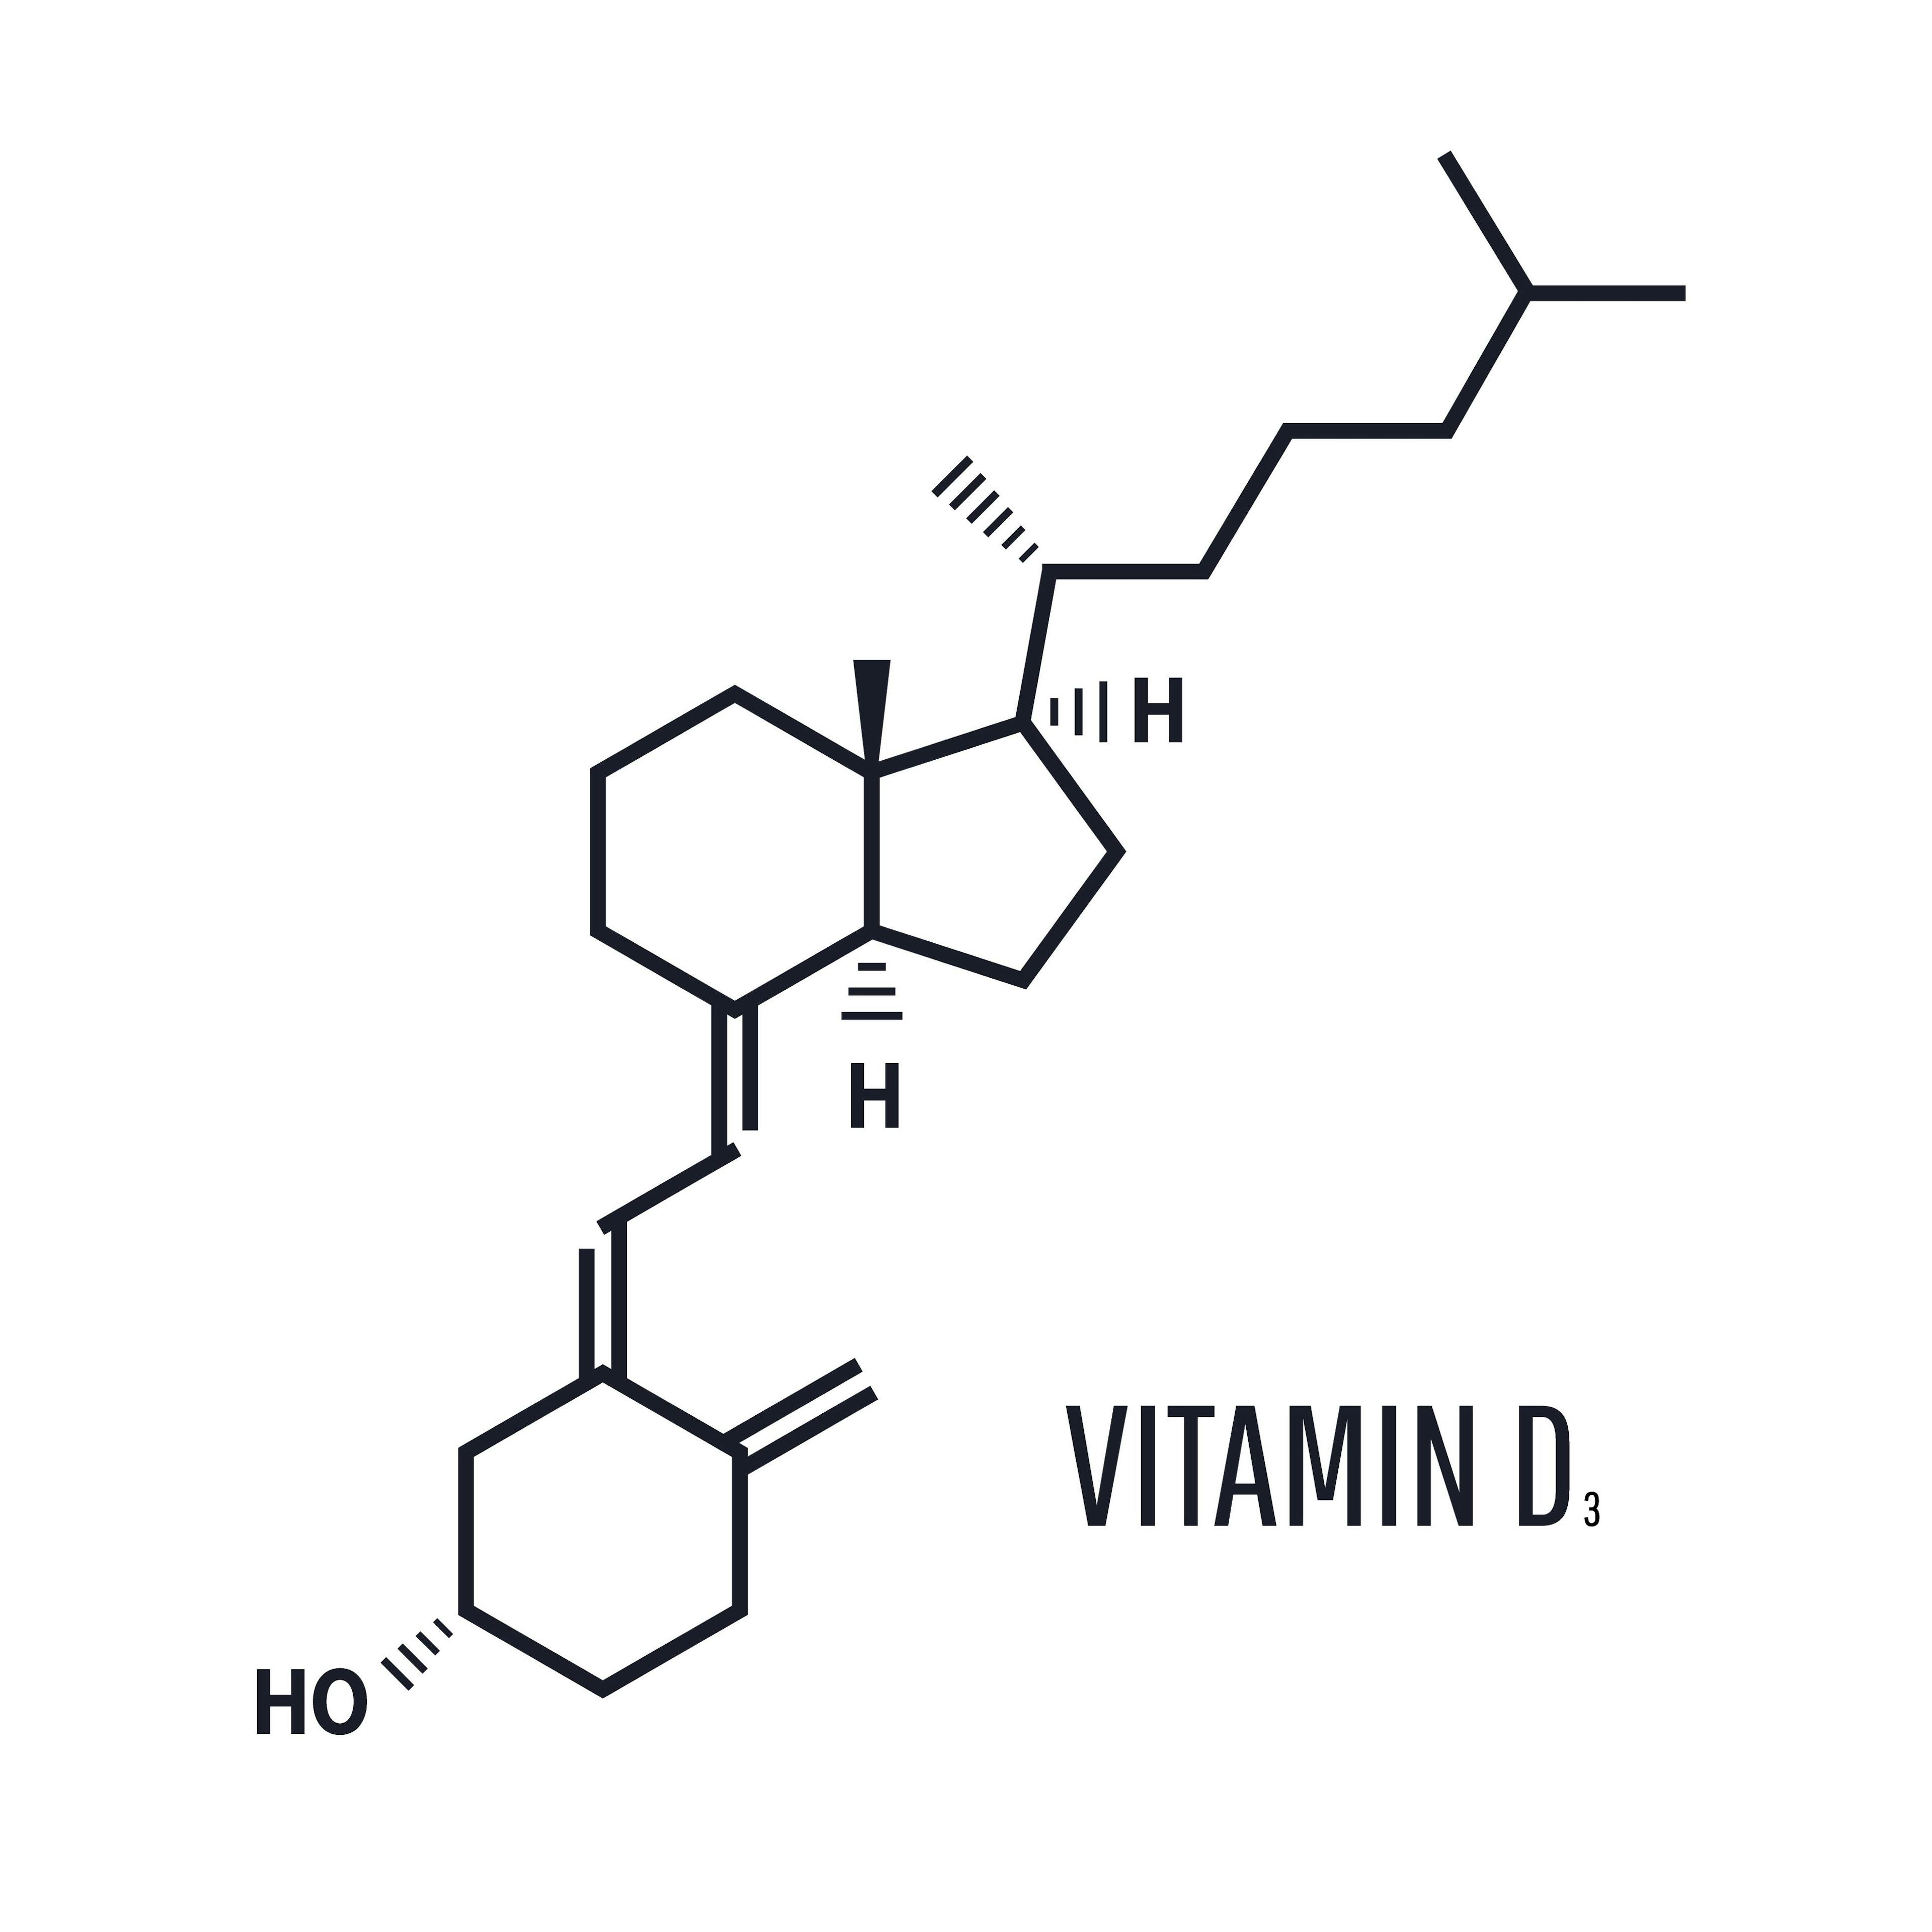 Vitamin D Molecule Illustration | image credit: Shi - stock.adobe.com